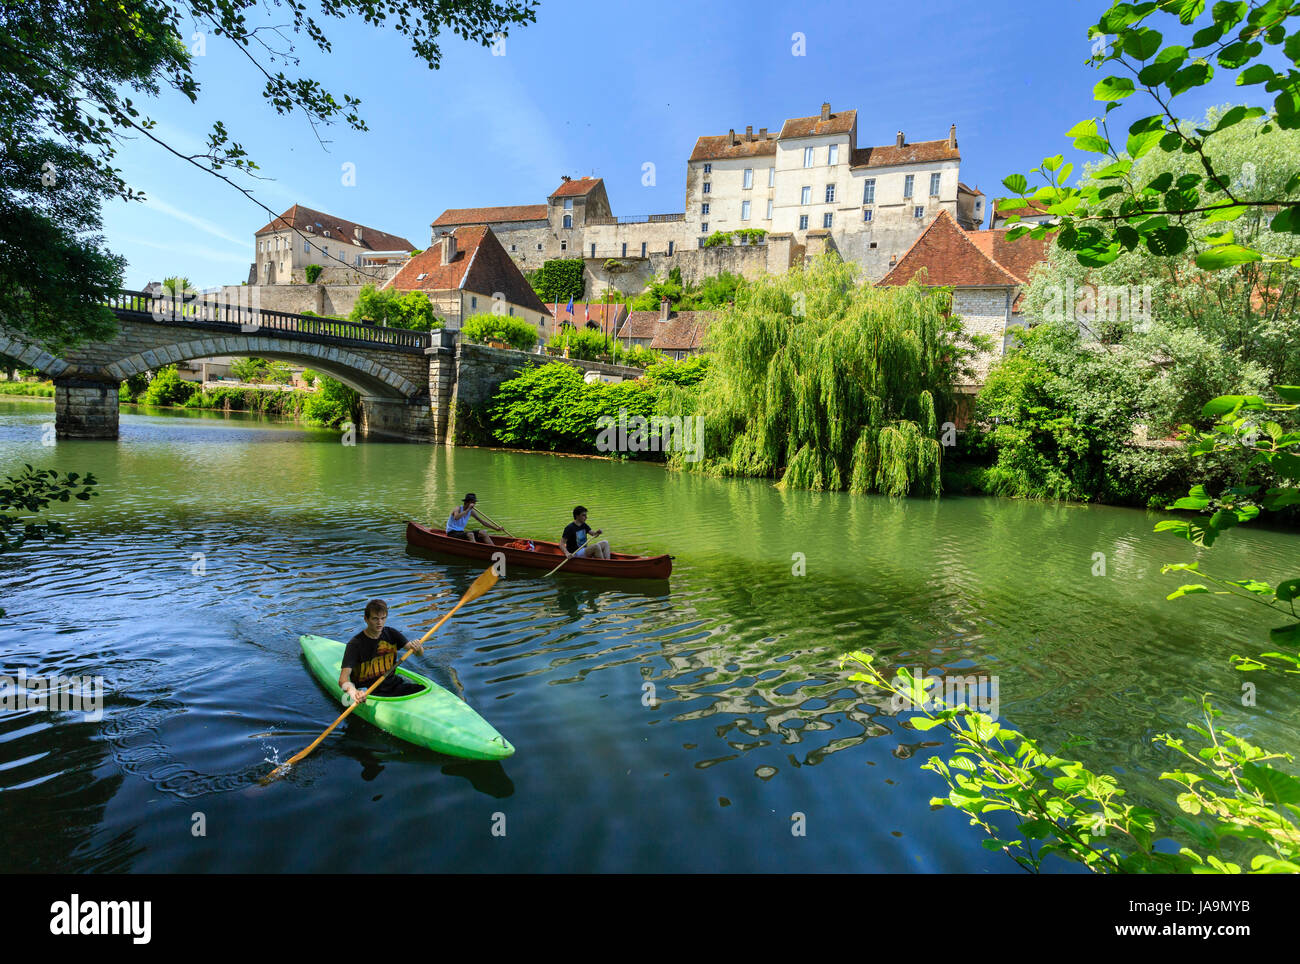 Frankreich, Haute Saône, Pesmes, beschriftet Les Plus beaux villages de France (Schönste Dörfer Frankreichs) und der Ognon Fluss Stockfoto